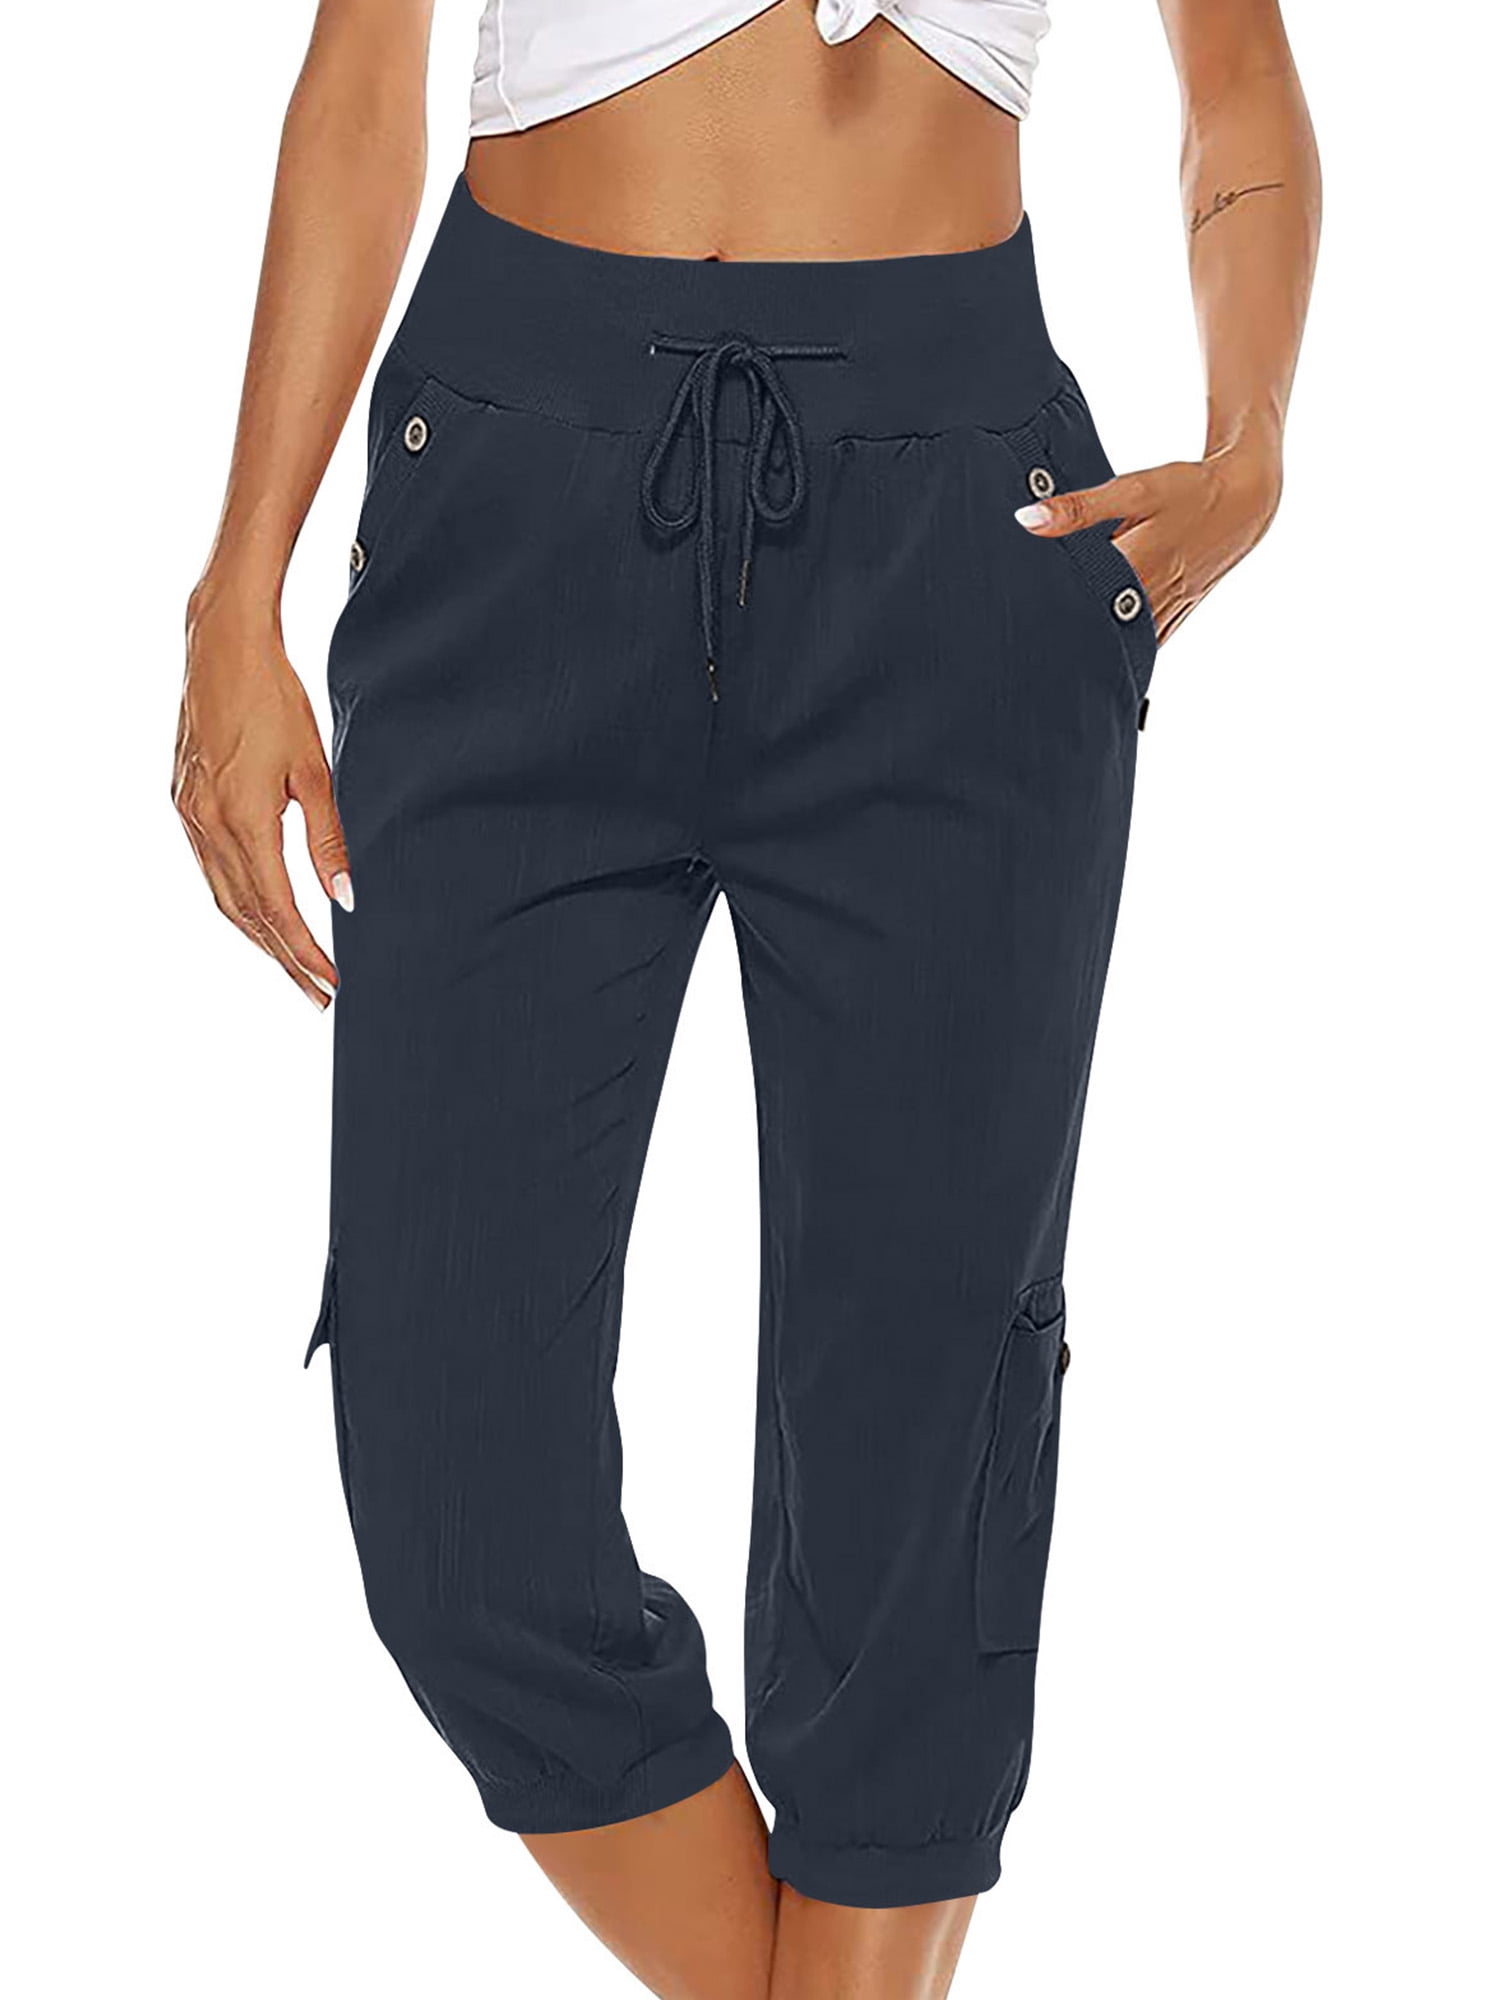 Capris for Women Casual Summer Cargo Crop Pants Loose Comfy Drawstring Yoga  Jogger Capri Pants with Pockets Camel S